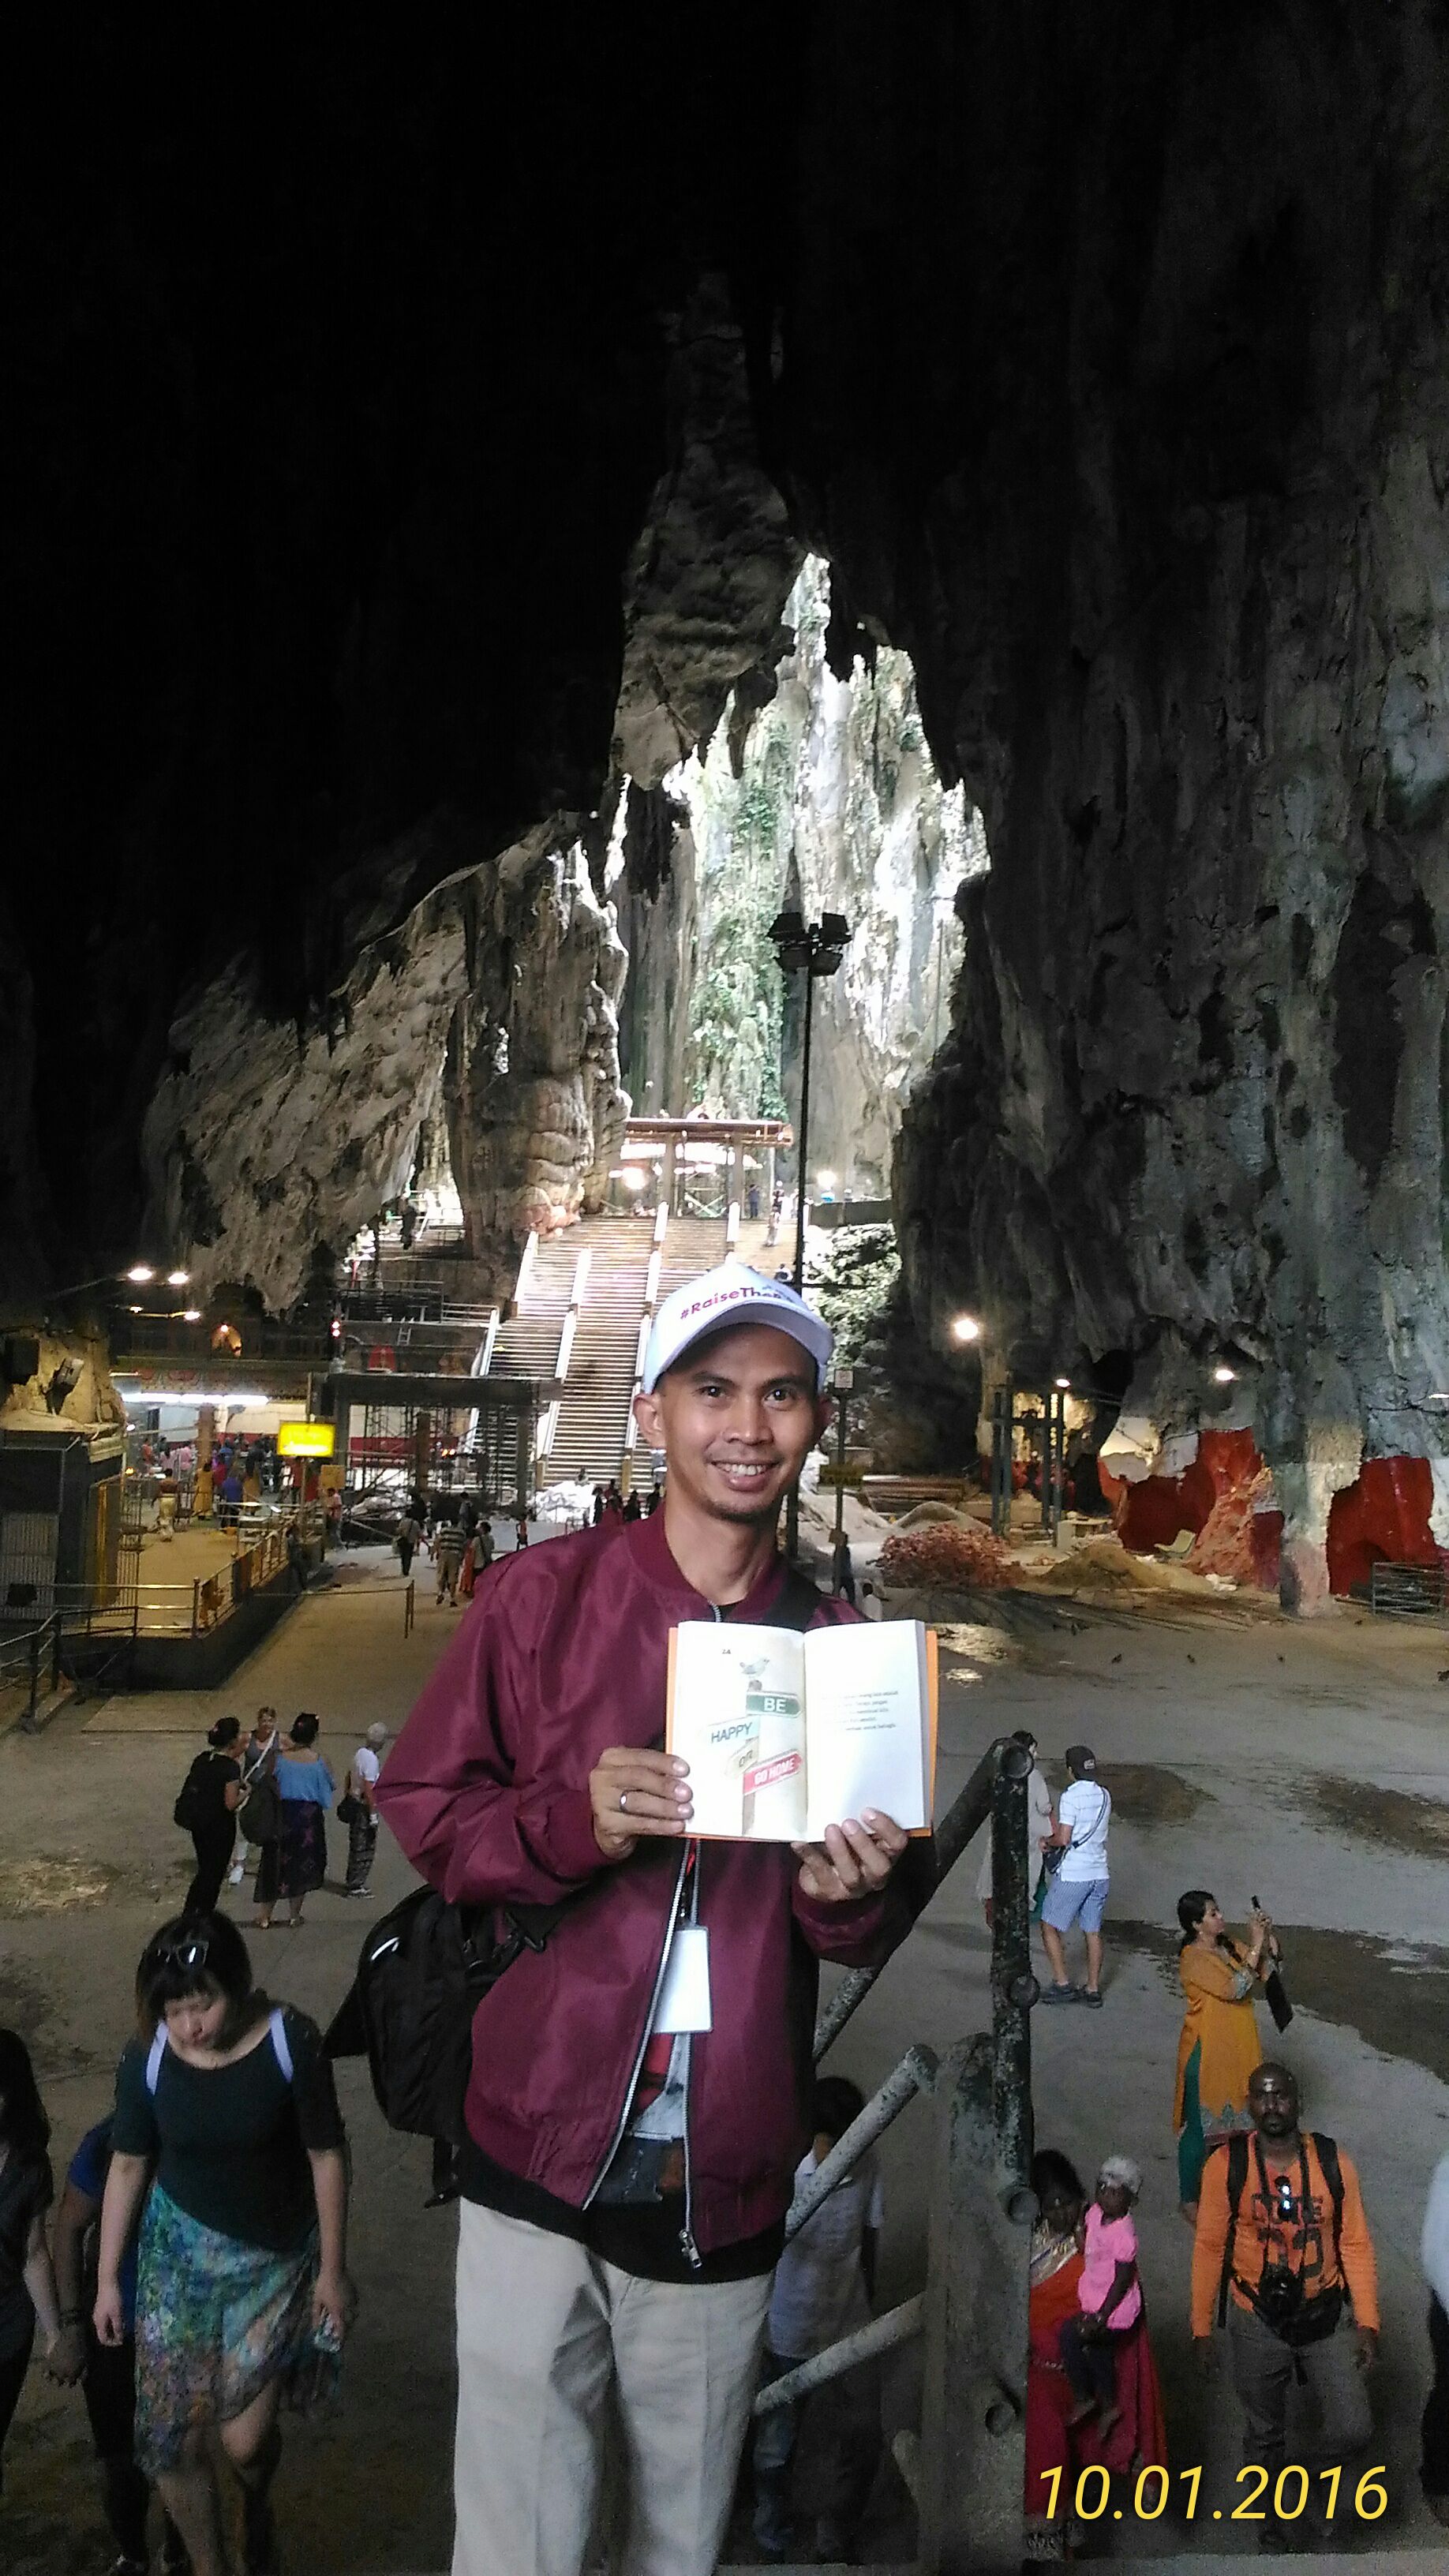 Saya,Buku Danny dan Batu Caves Malaysia (dokumenmtasi pribadi)